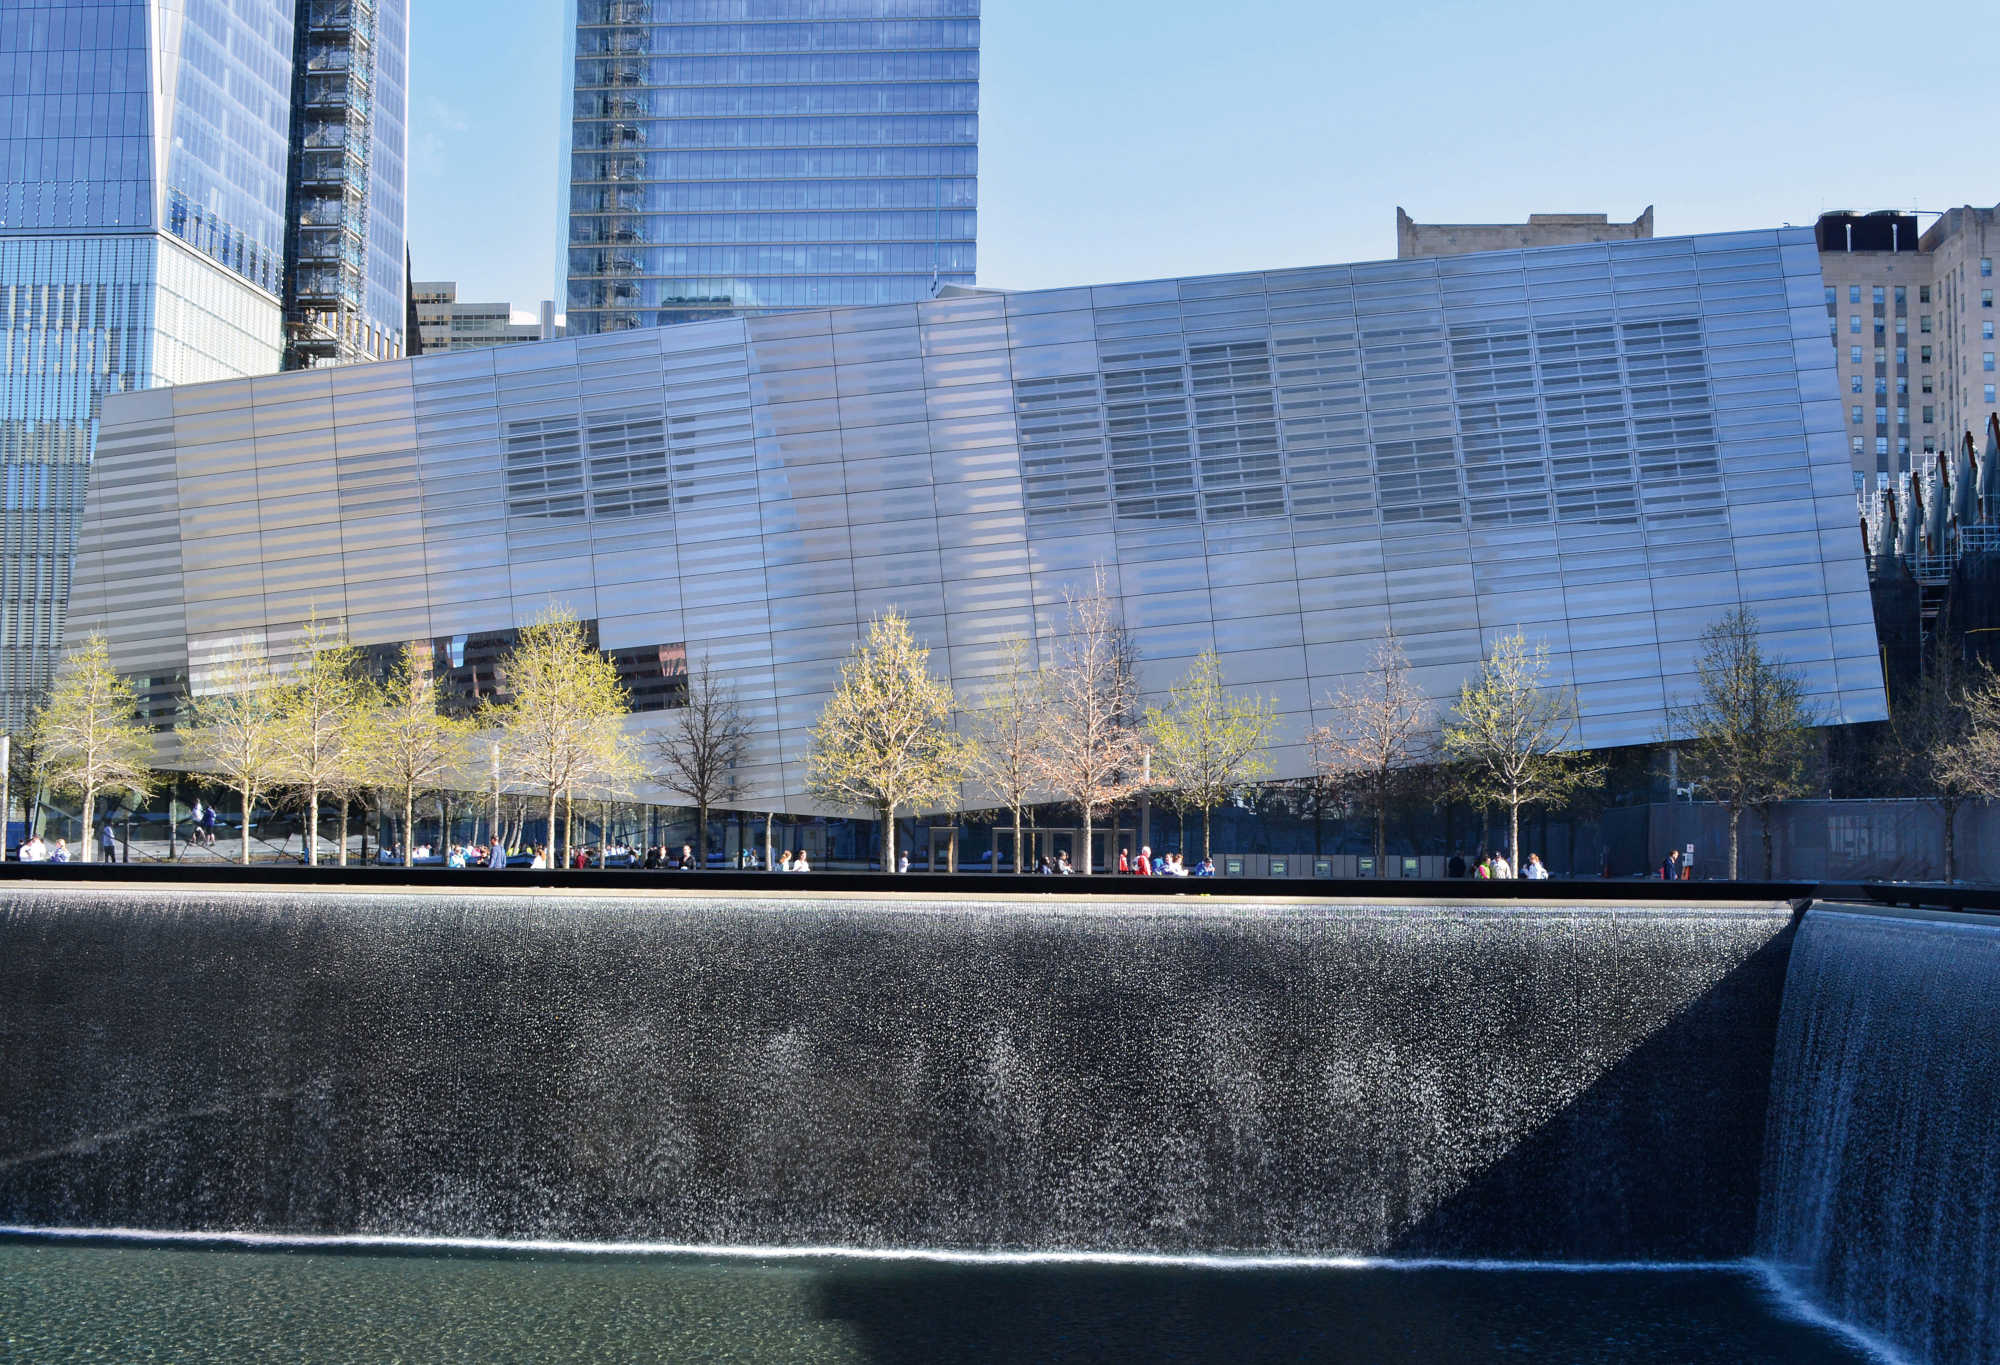 9/11 Memorial and Museum, New York City, New York, USA, Snøhetta and Davis Brody Bond (2014).